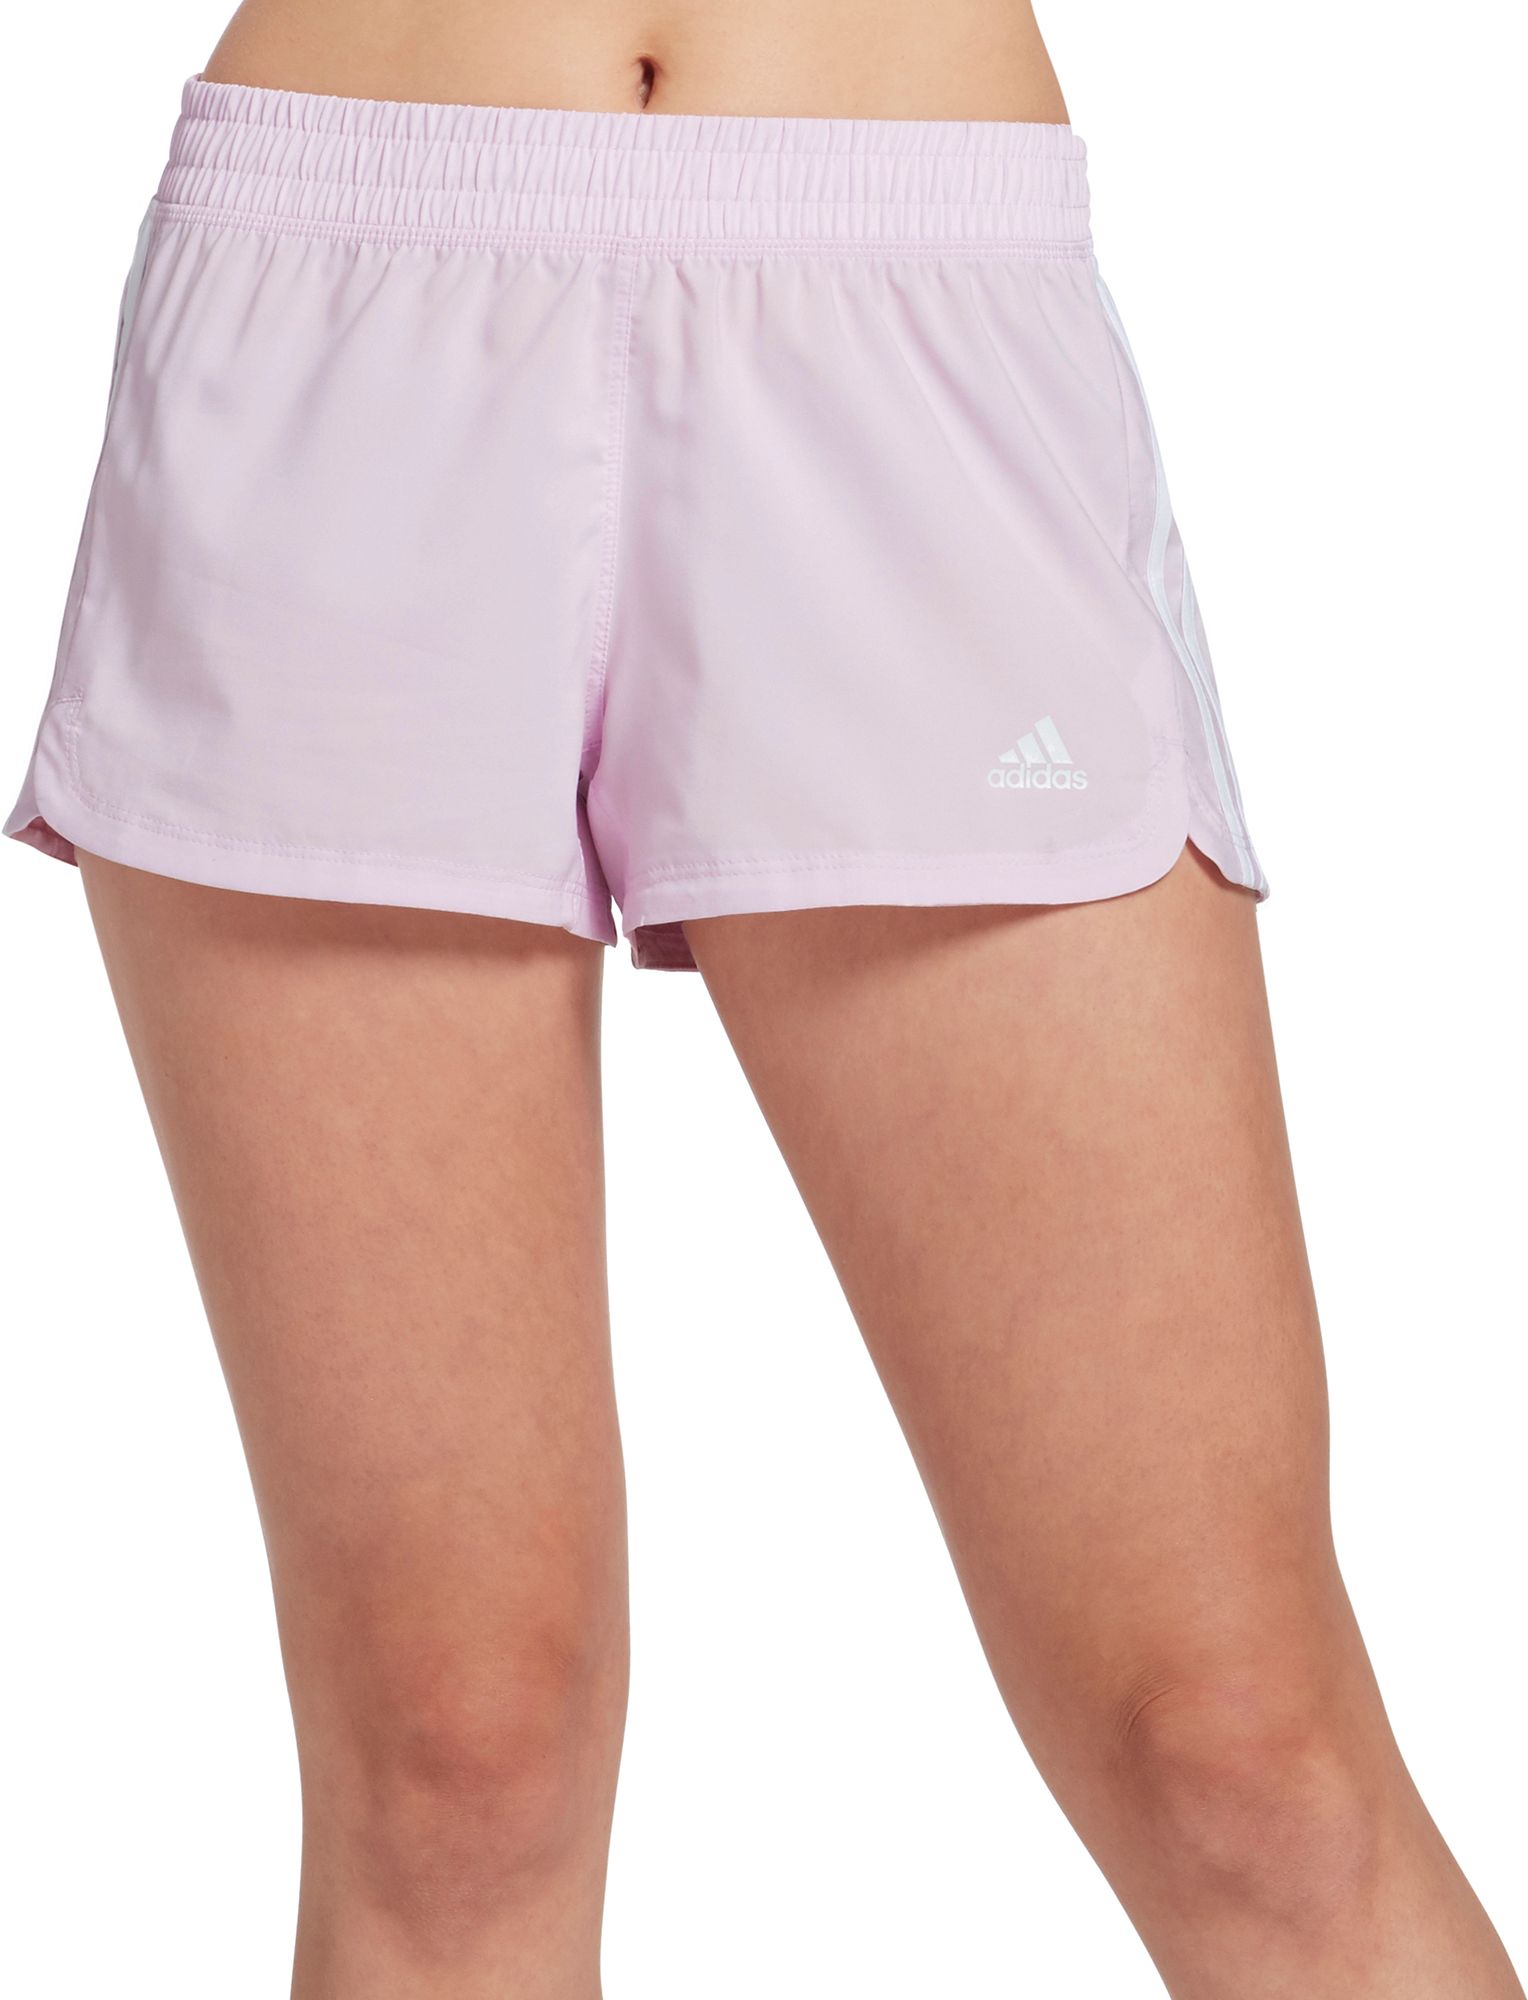 adidas shorts womens cotton